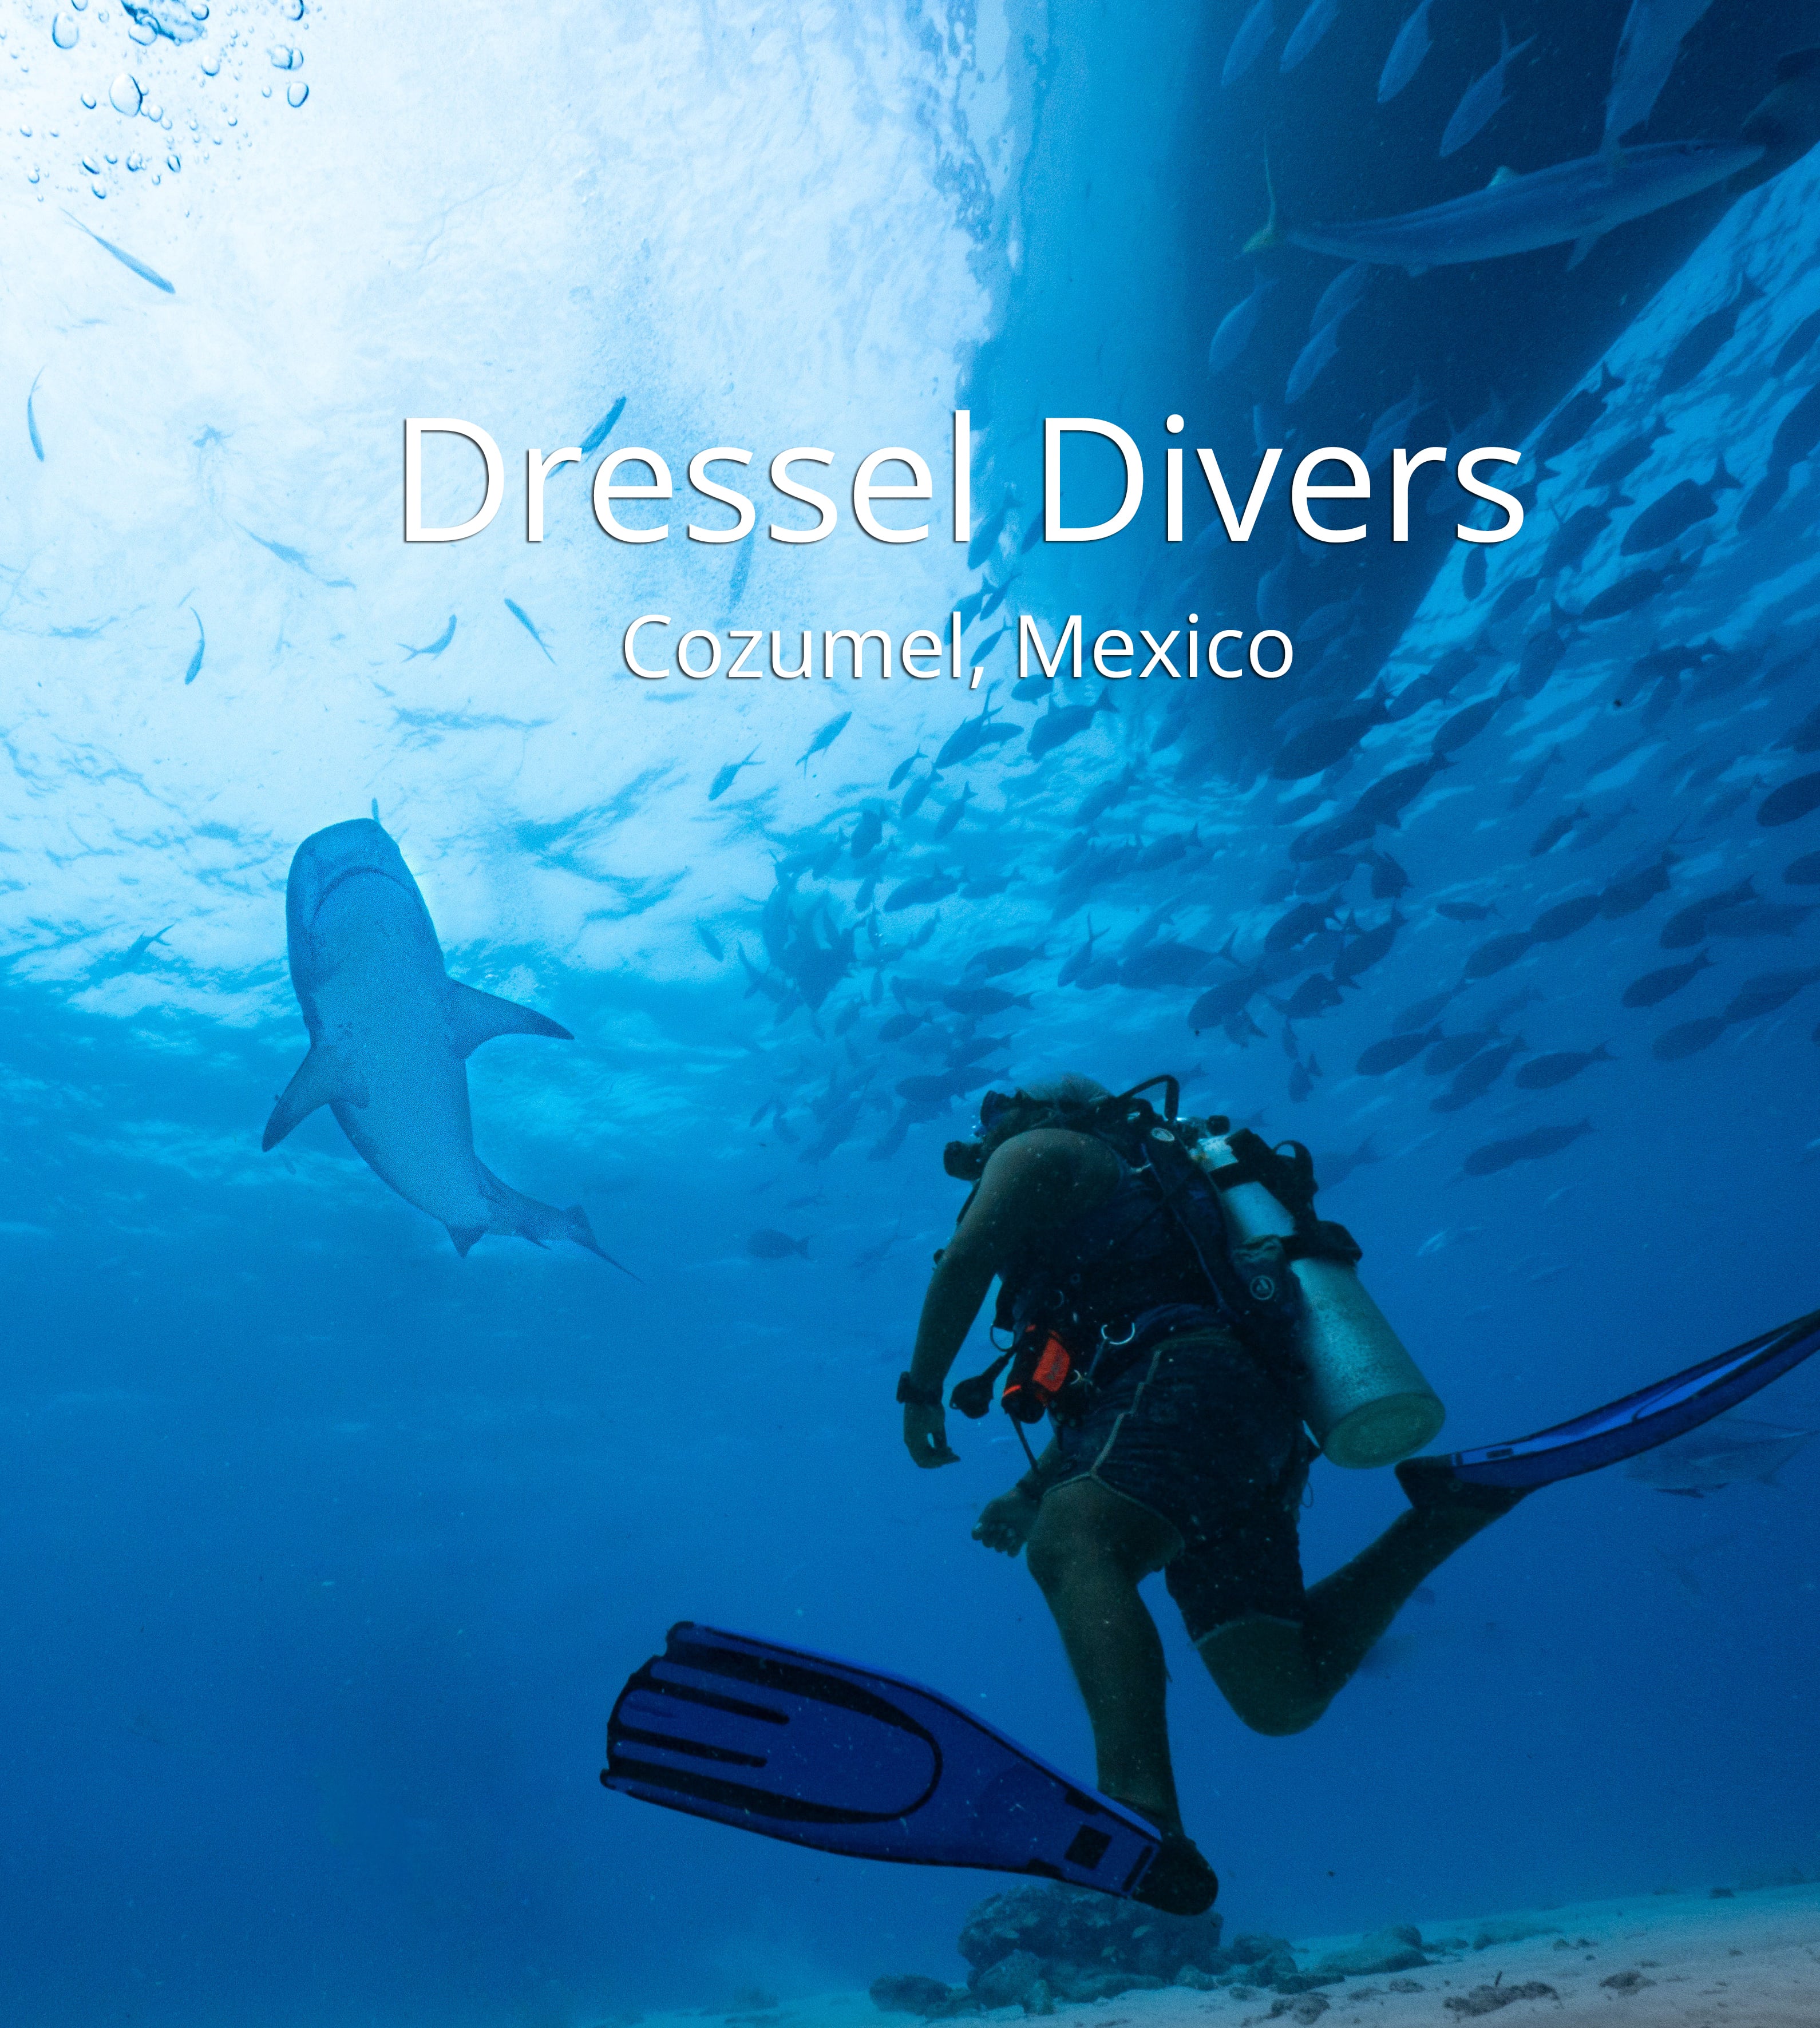 Dressel Divers Cozumel Mexico The Scuba Directory